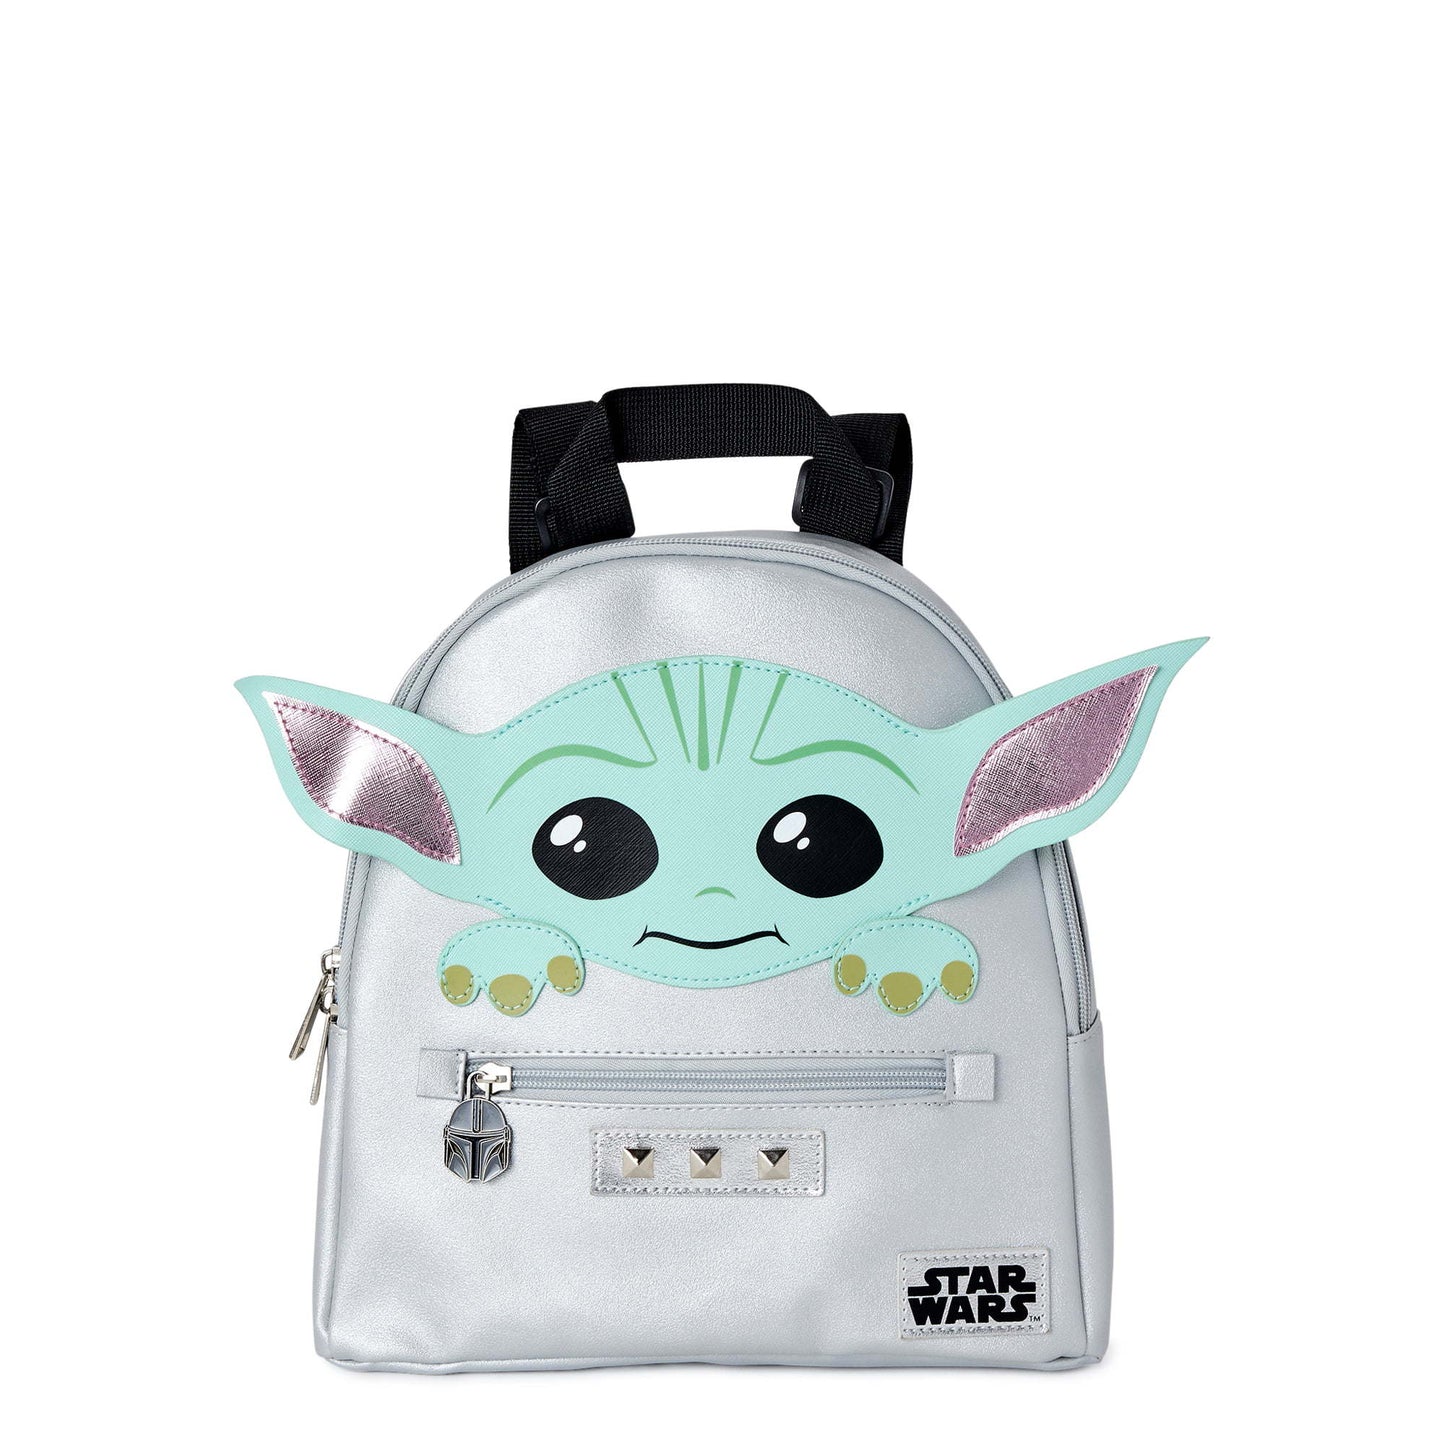 Star Wars Grogu Baby Yoda Women's Mini Backpack, Grey Silver